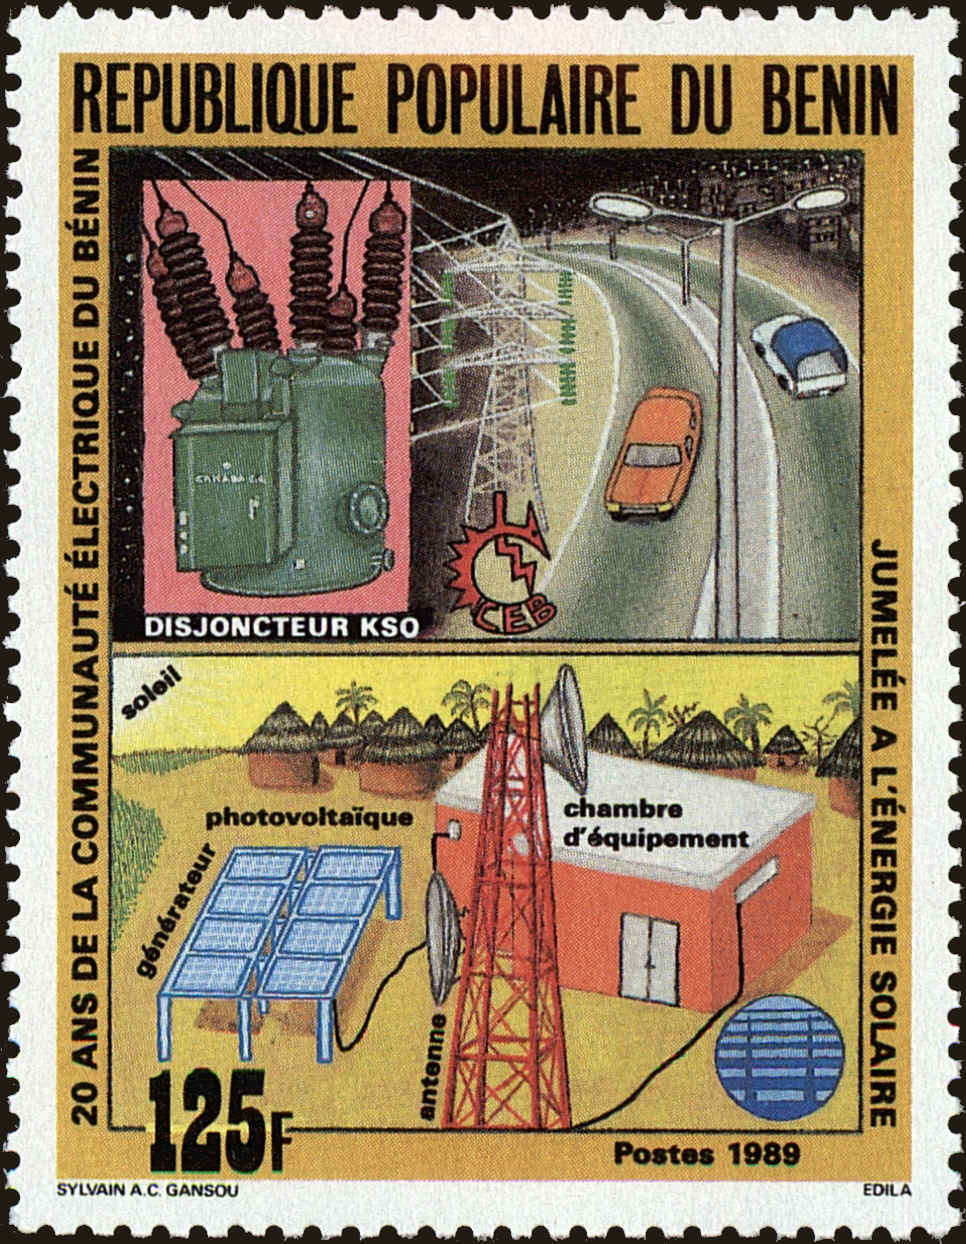 Front view of Benin 663 collectors stamp